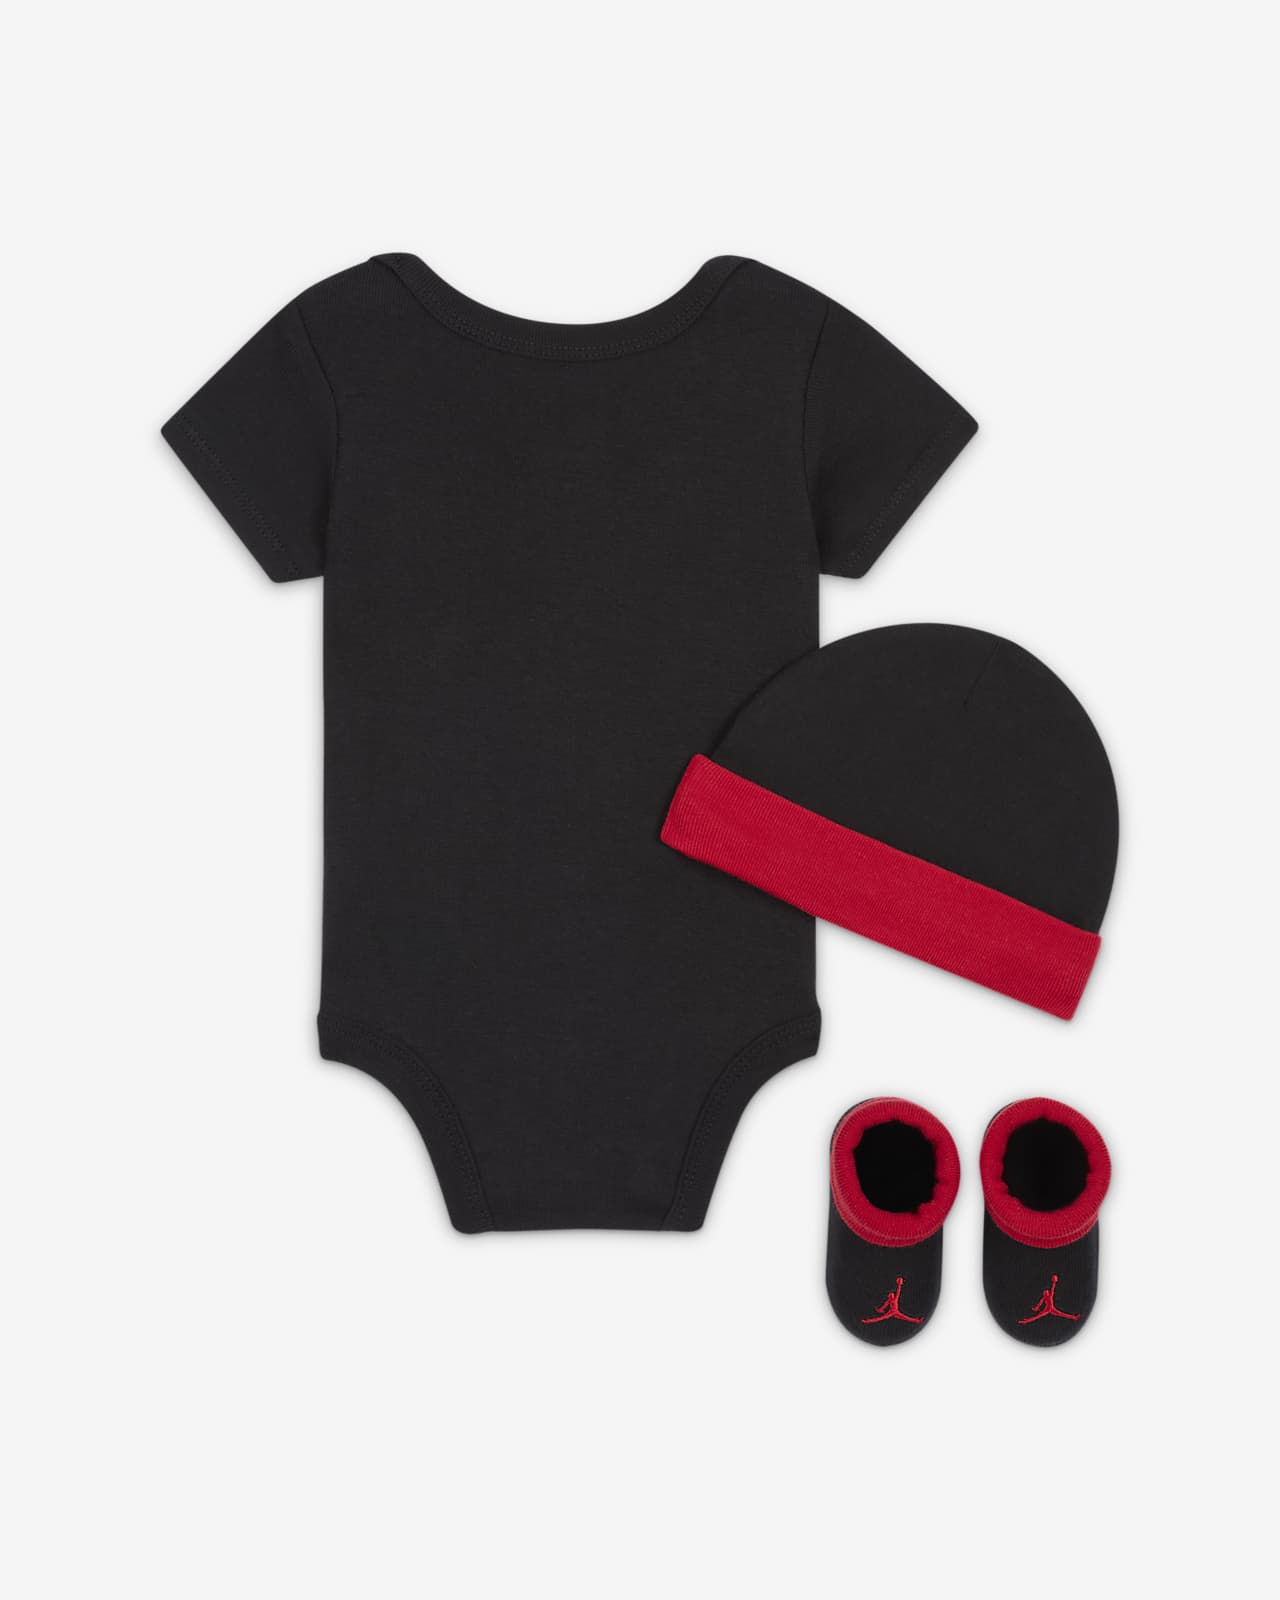 Jordan Jumpman Baby Bodysuit, Beanie 